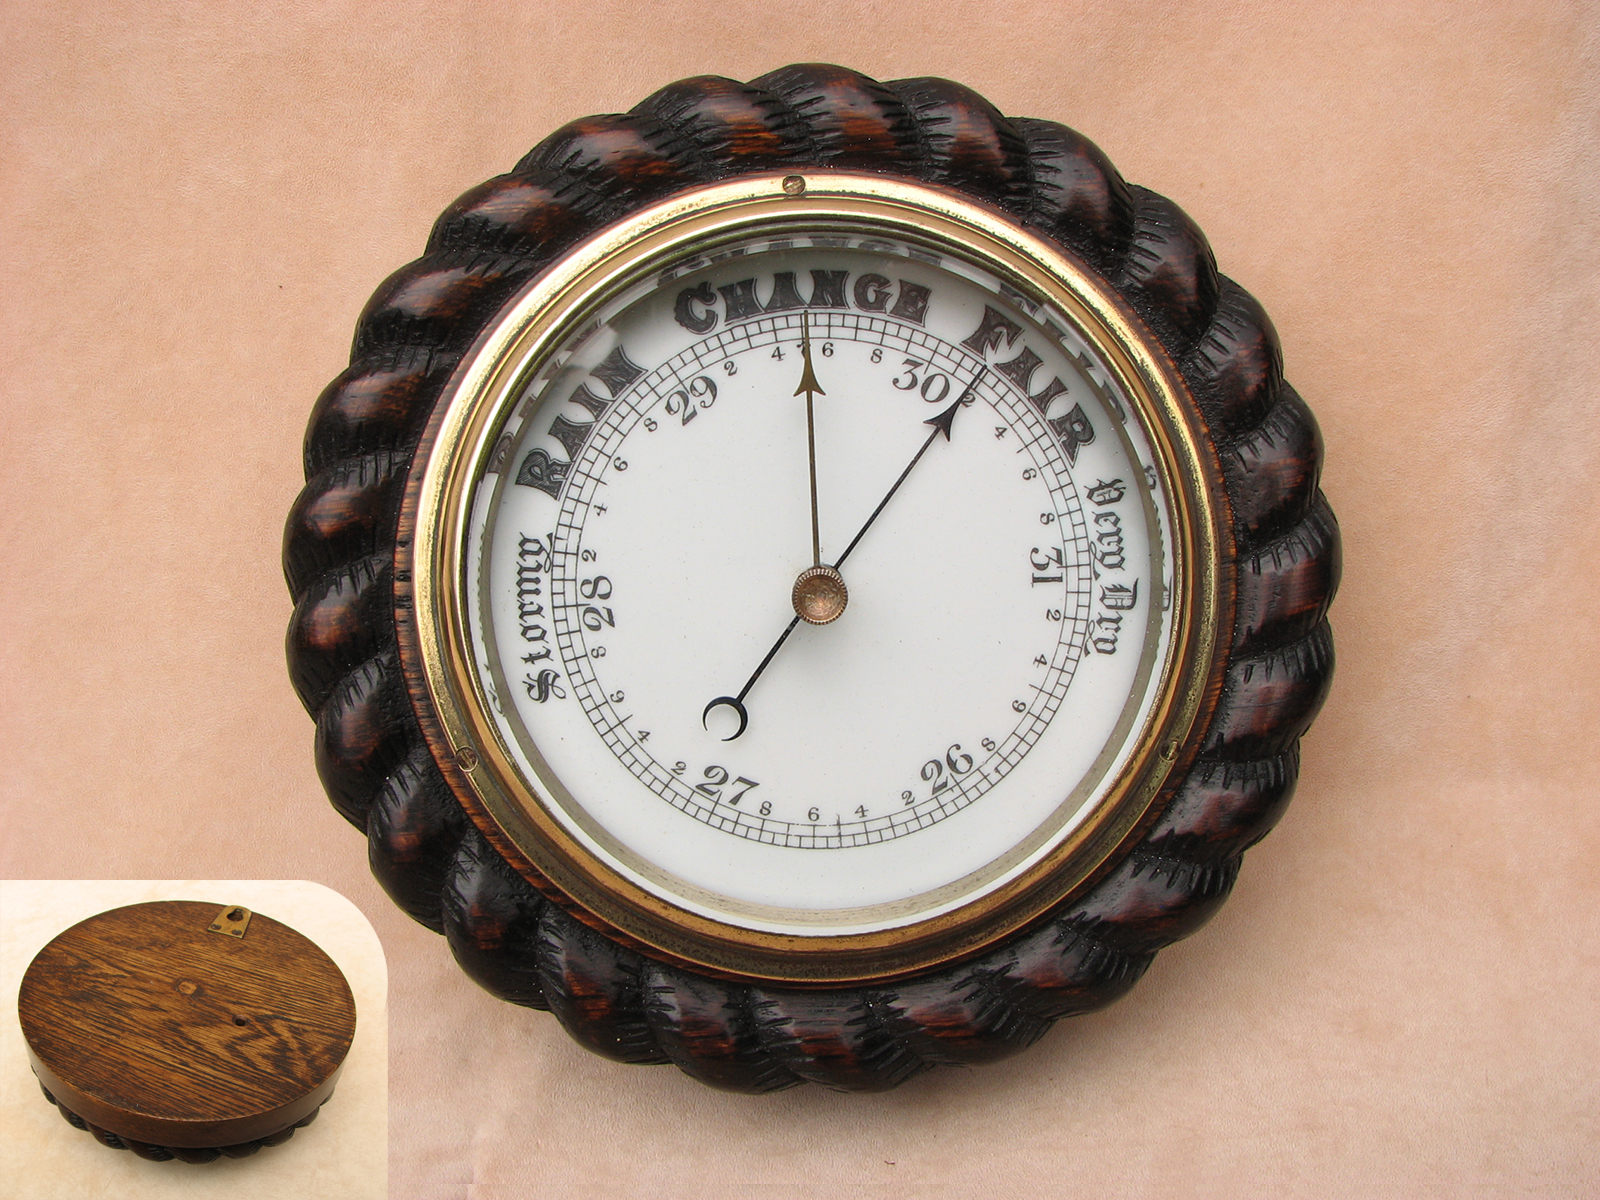 Victorian dark oak cased rope twist aneroid barometer